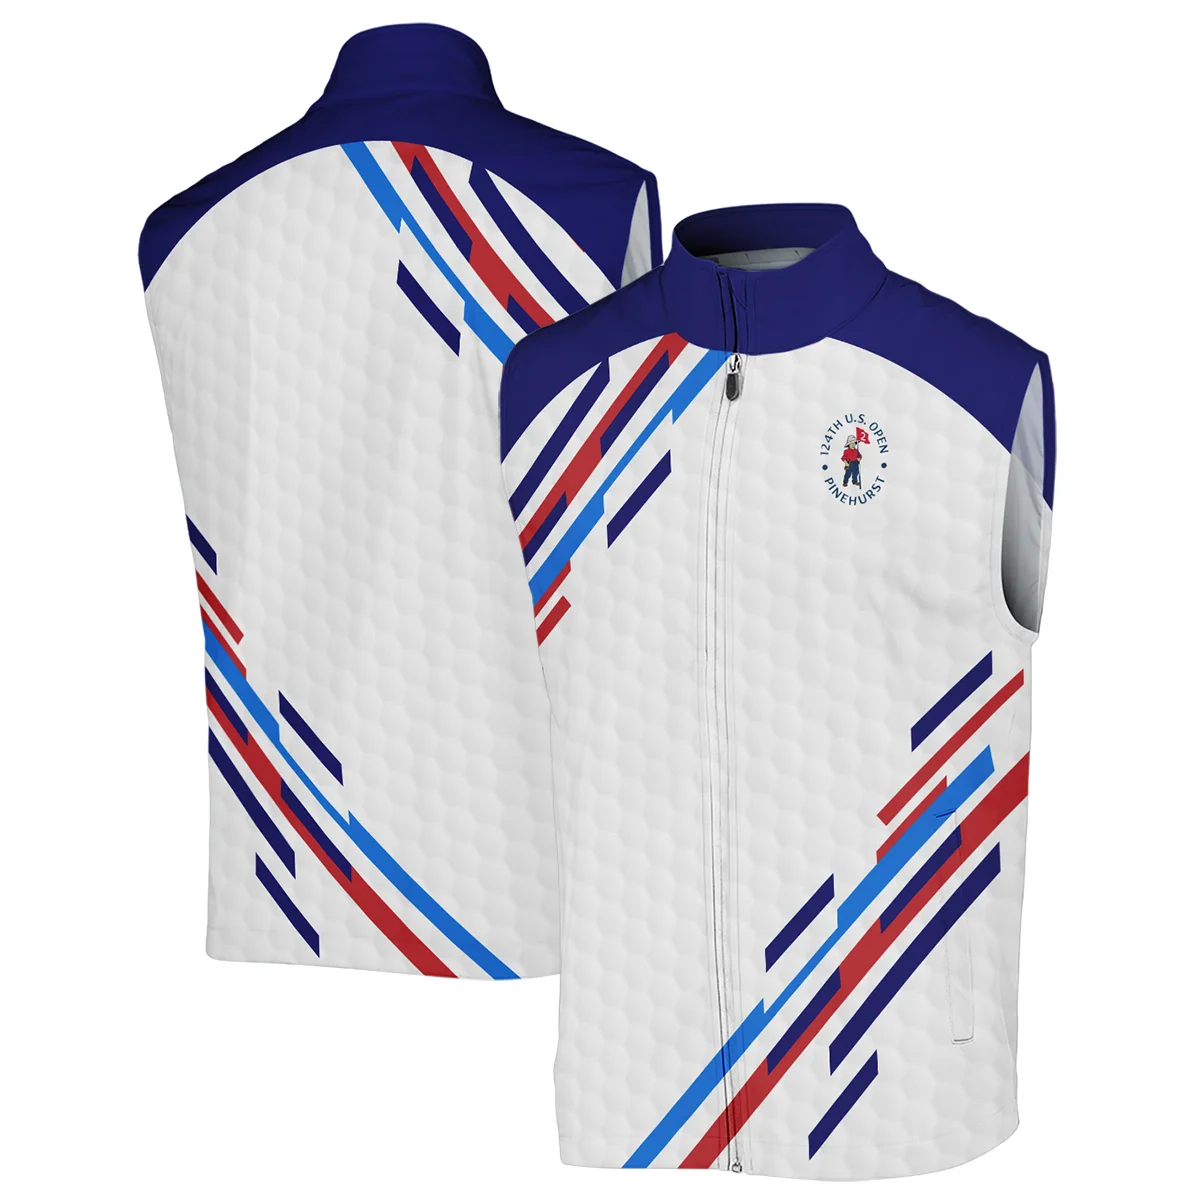 Golf Sport Callaway 124th U.S. Open Pinehurst Quarter-Zip Jacket Blue Red Golf Pattern White All Over Print Quarter-Zip Jacket